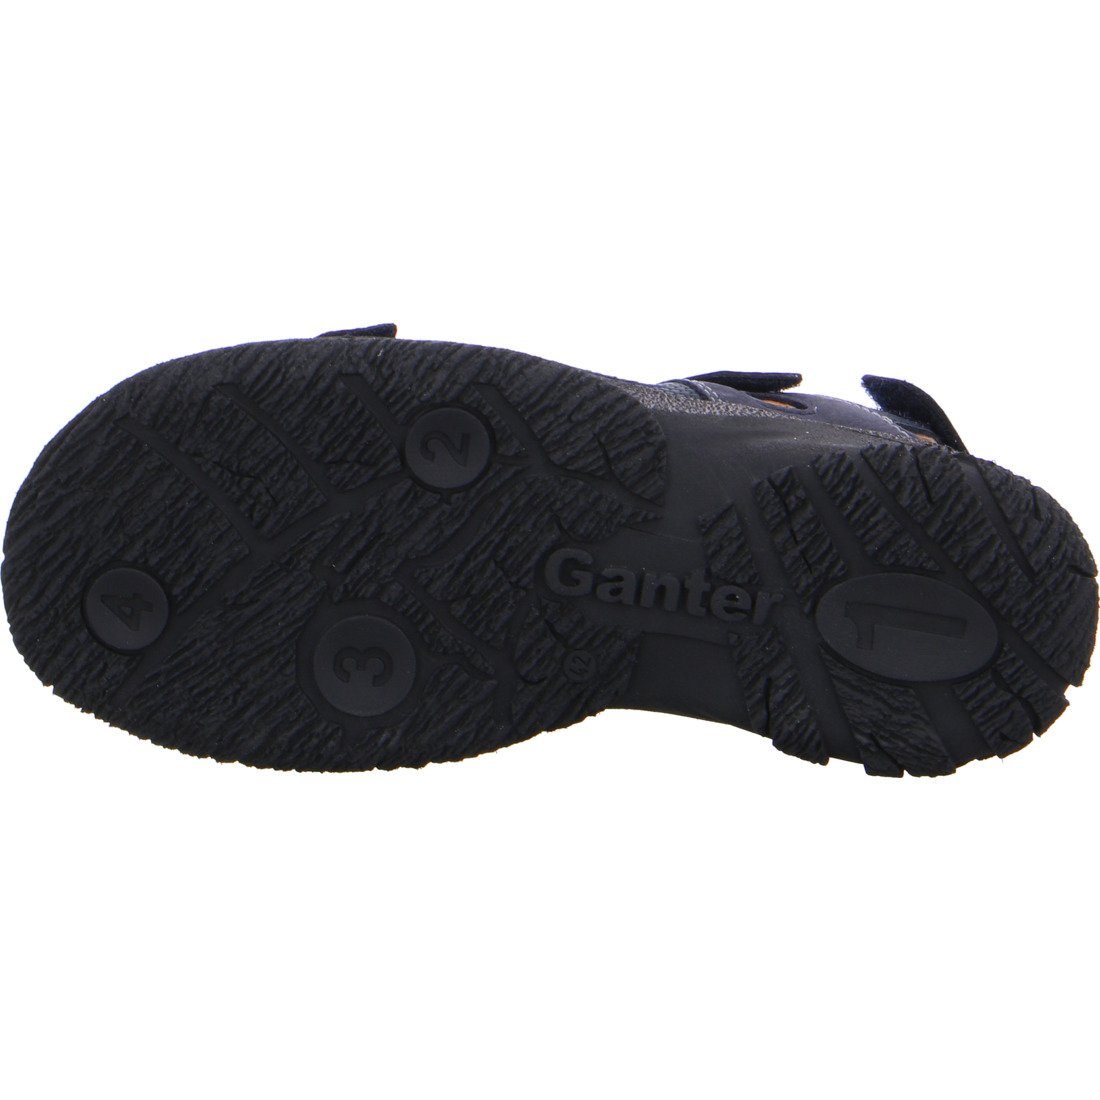 Sandale Giovanni Ganter Nubuk - grün Ganter 043188 Sandale Schuhe, Herren